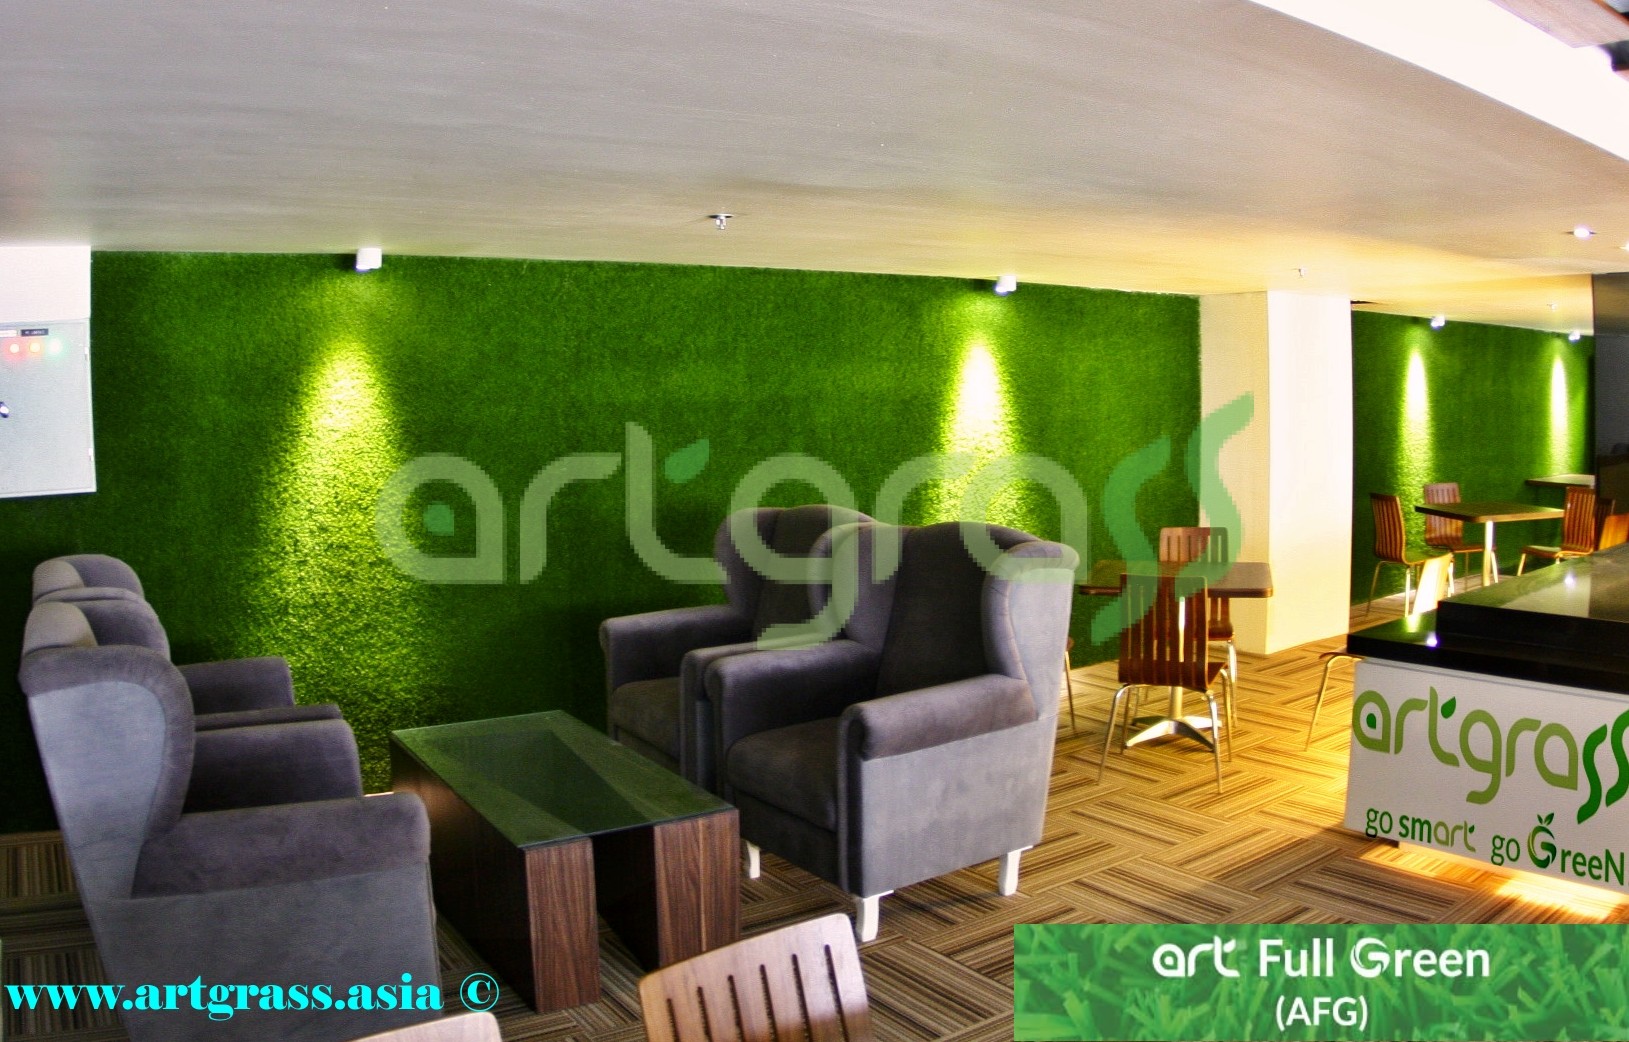 Artgrass Dinding Cafe Indoor Rumput Sintetis - Rumput Sintetis Di Dinding , HD Wallpaper & Backgrounds